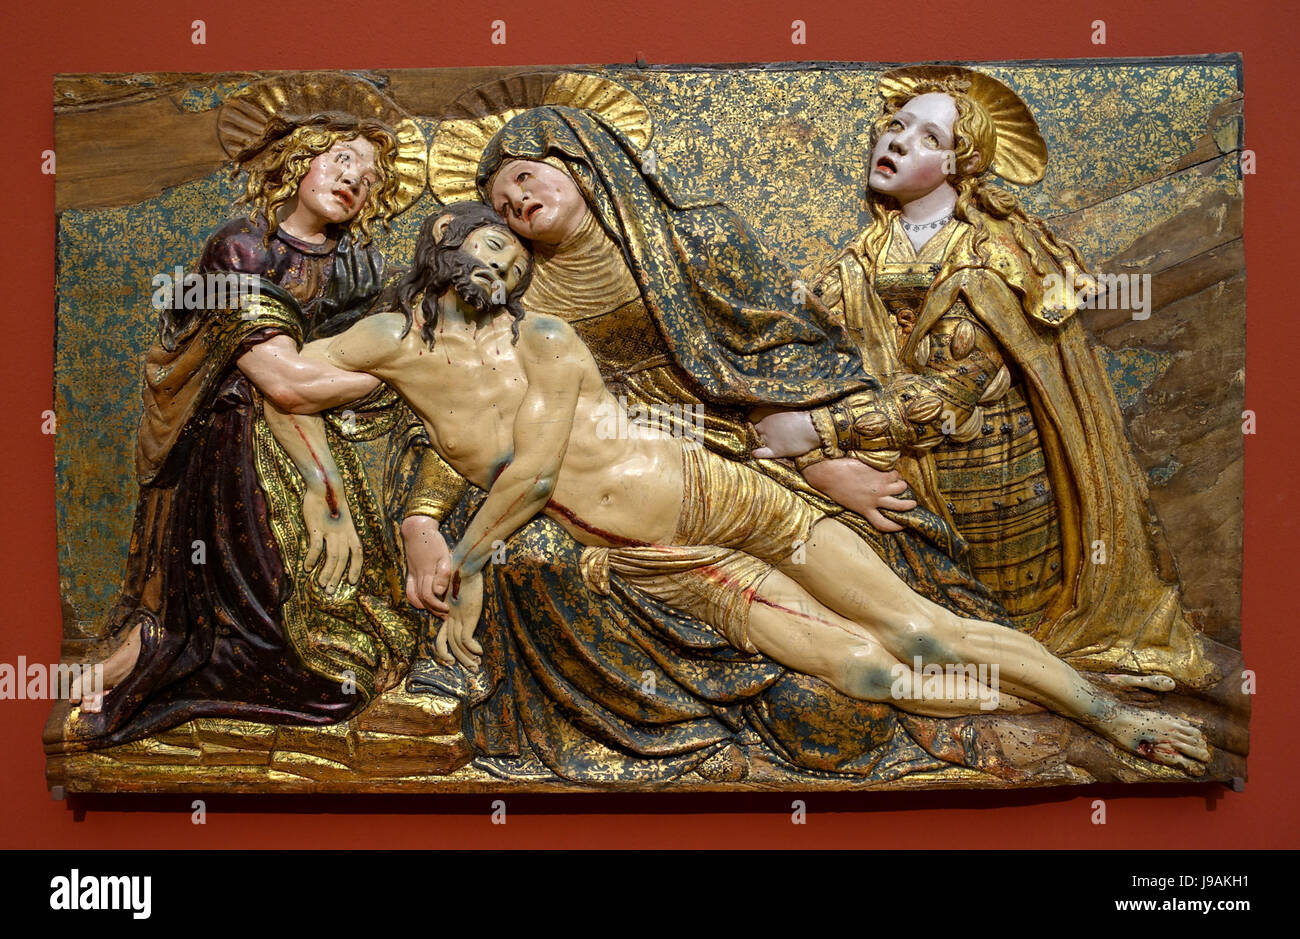 The Lamentation of Christ, by Juan de Valmaseda, c. 1525, walnut   Bode Museum   DSC02961 Stock Photo